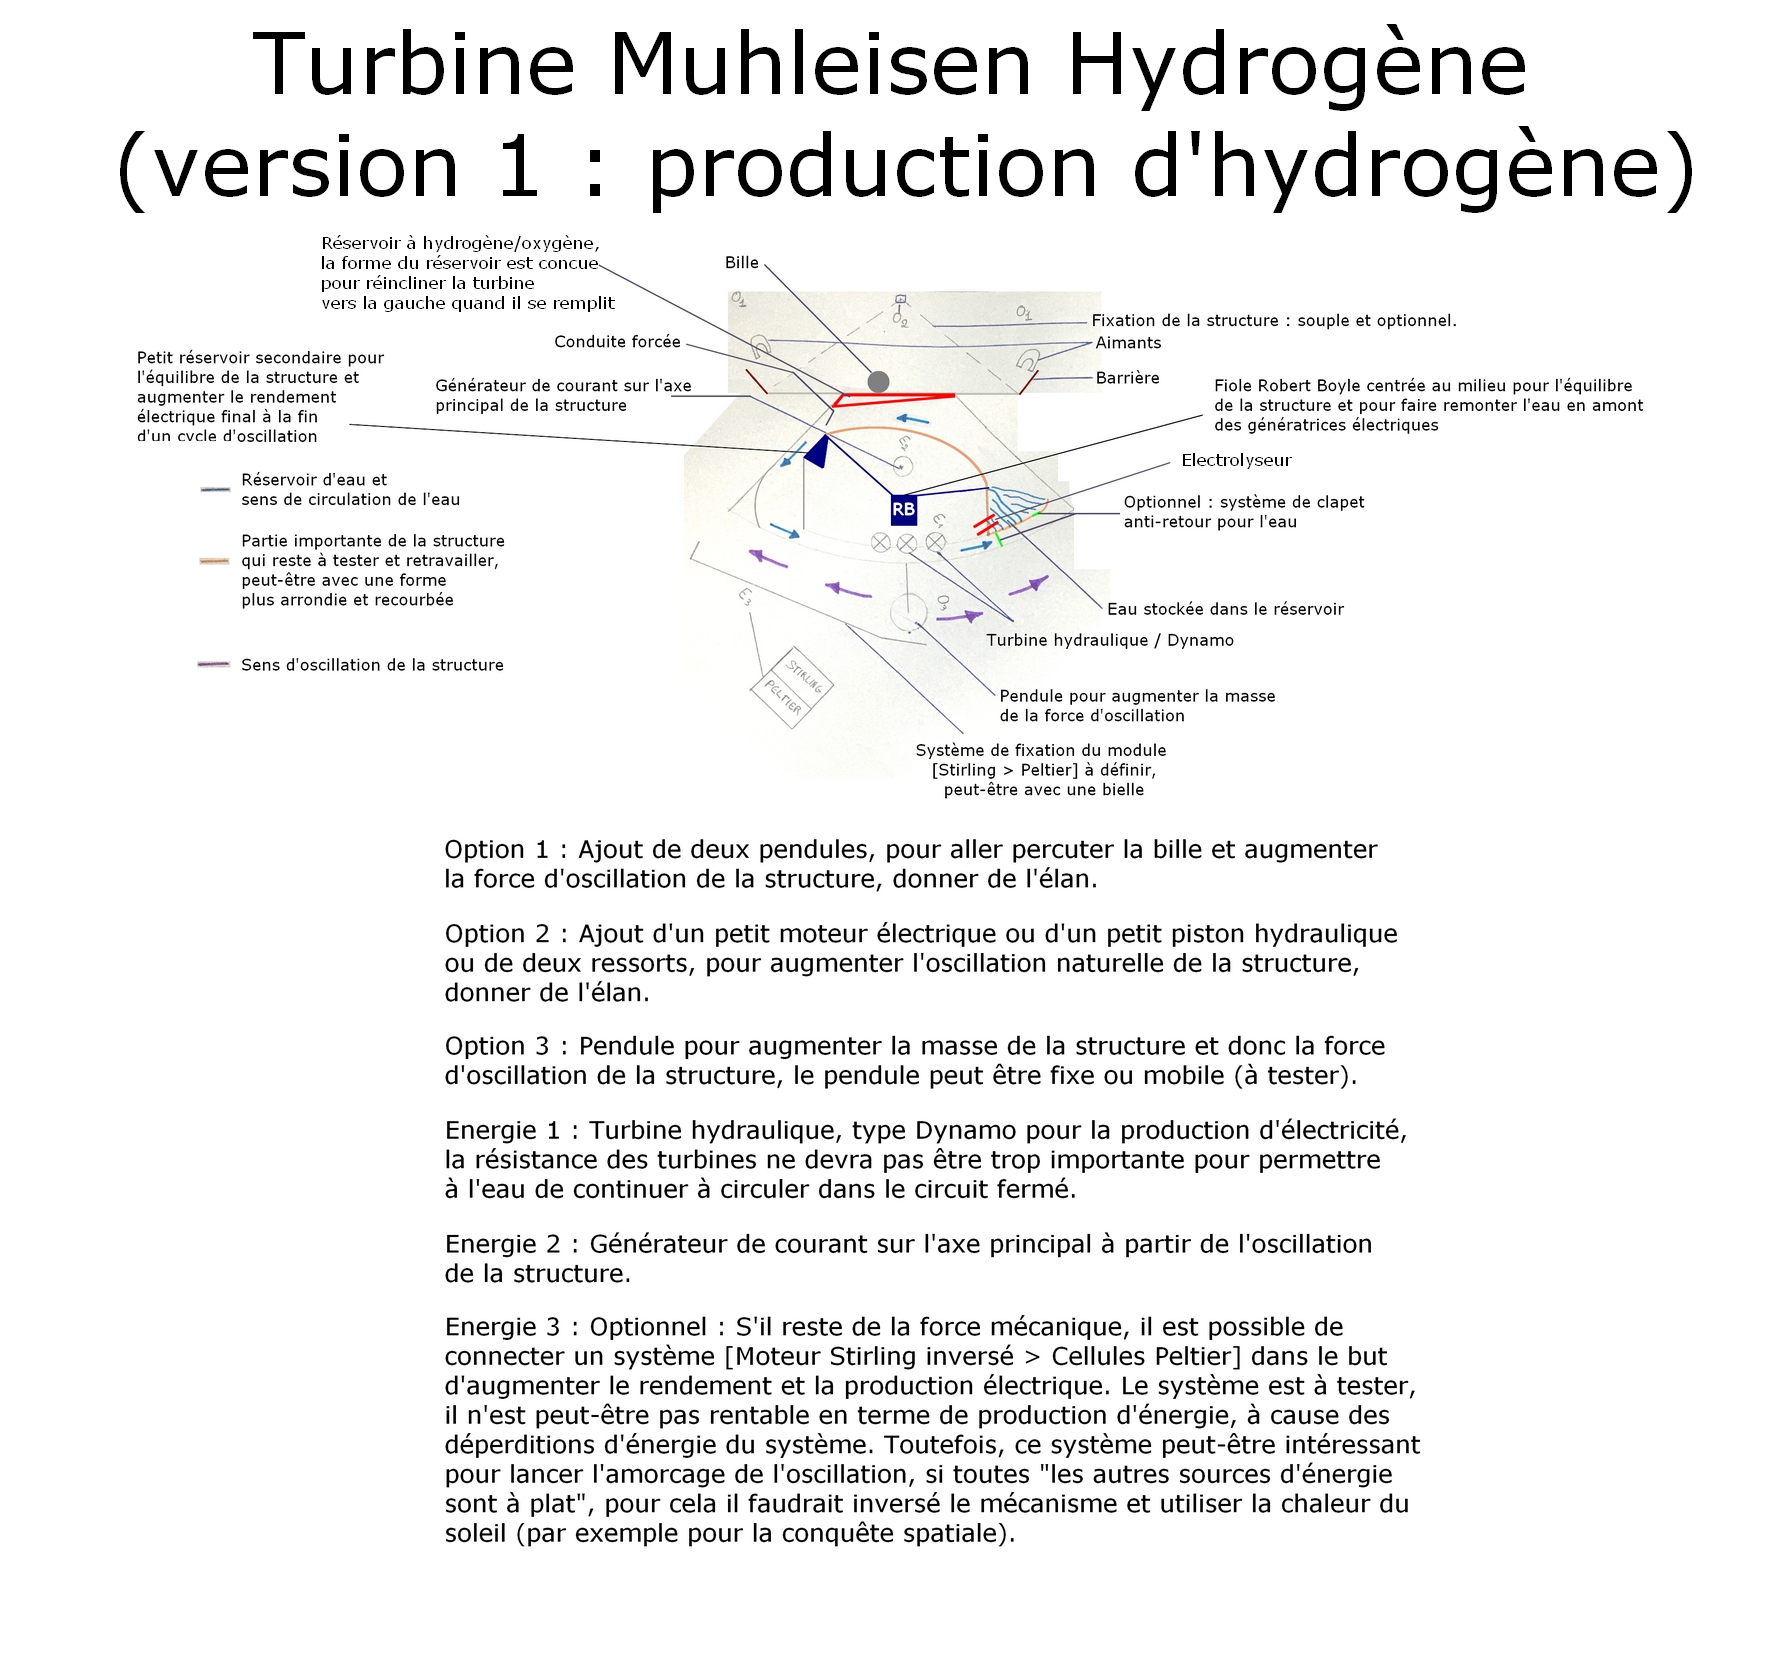 La Turbine Muhleisen version hydrogène